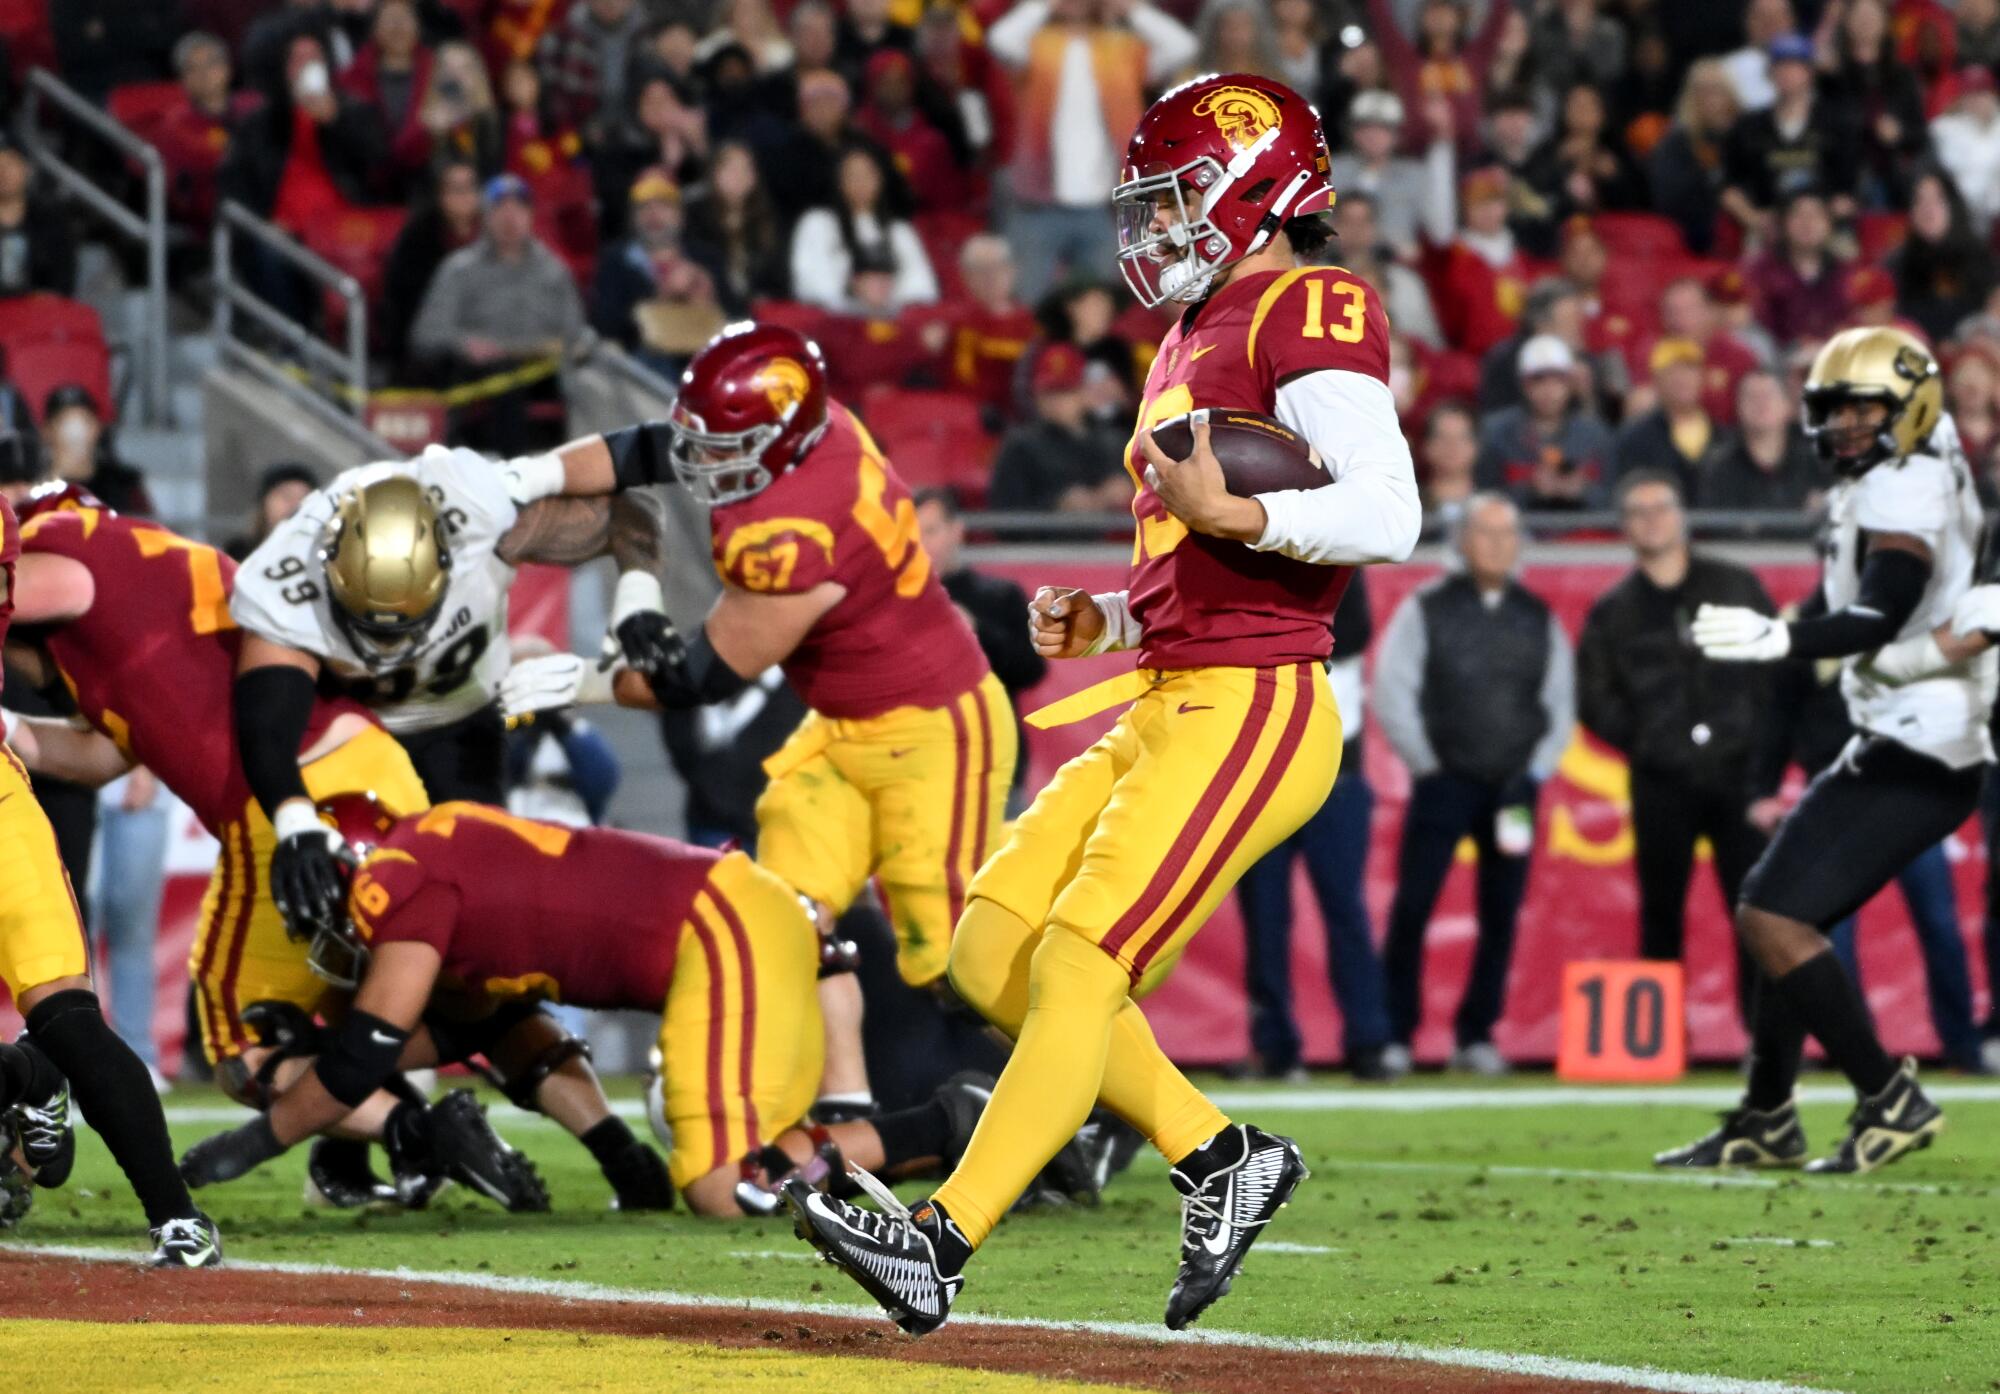 USC quarterback Caleb Williams scrambles into the end zone to score a touchdown against Colorado in the second quarter.